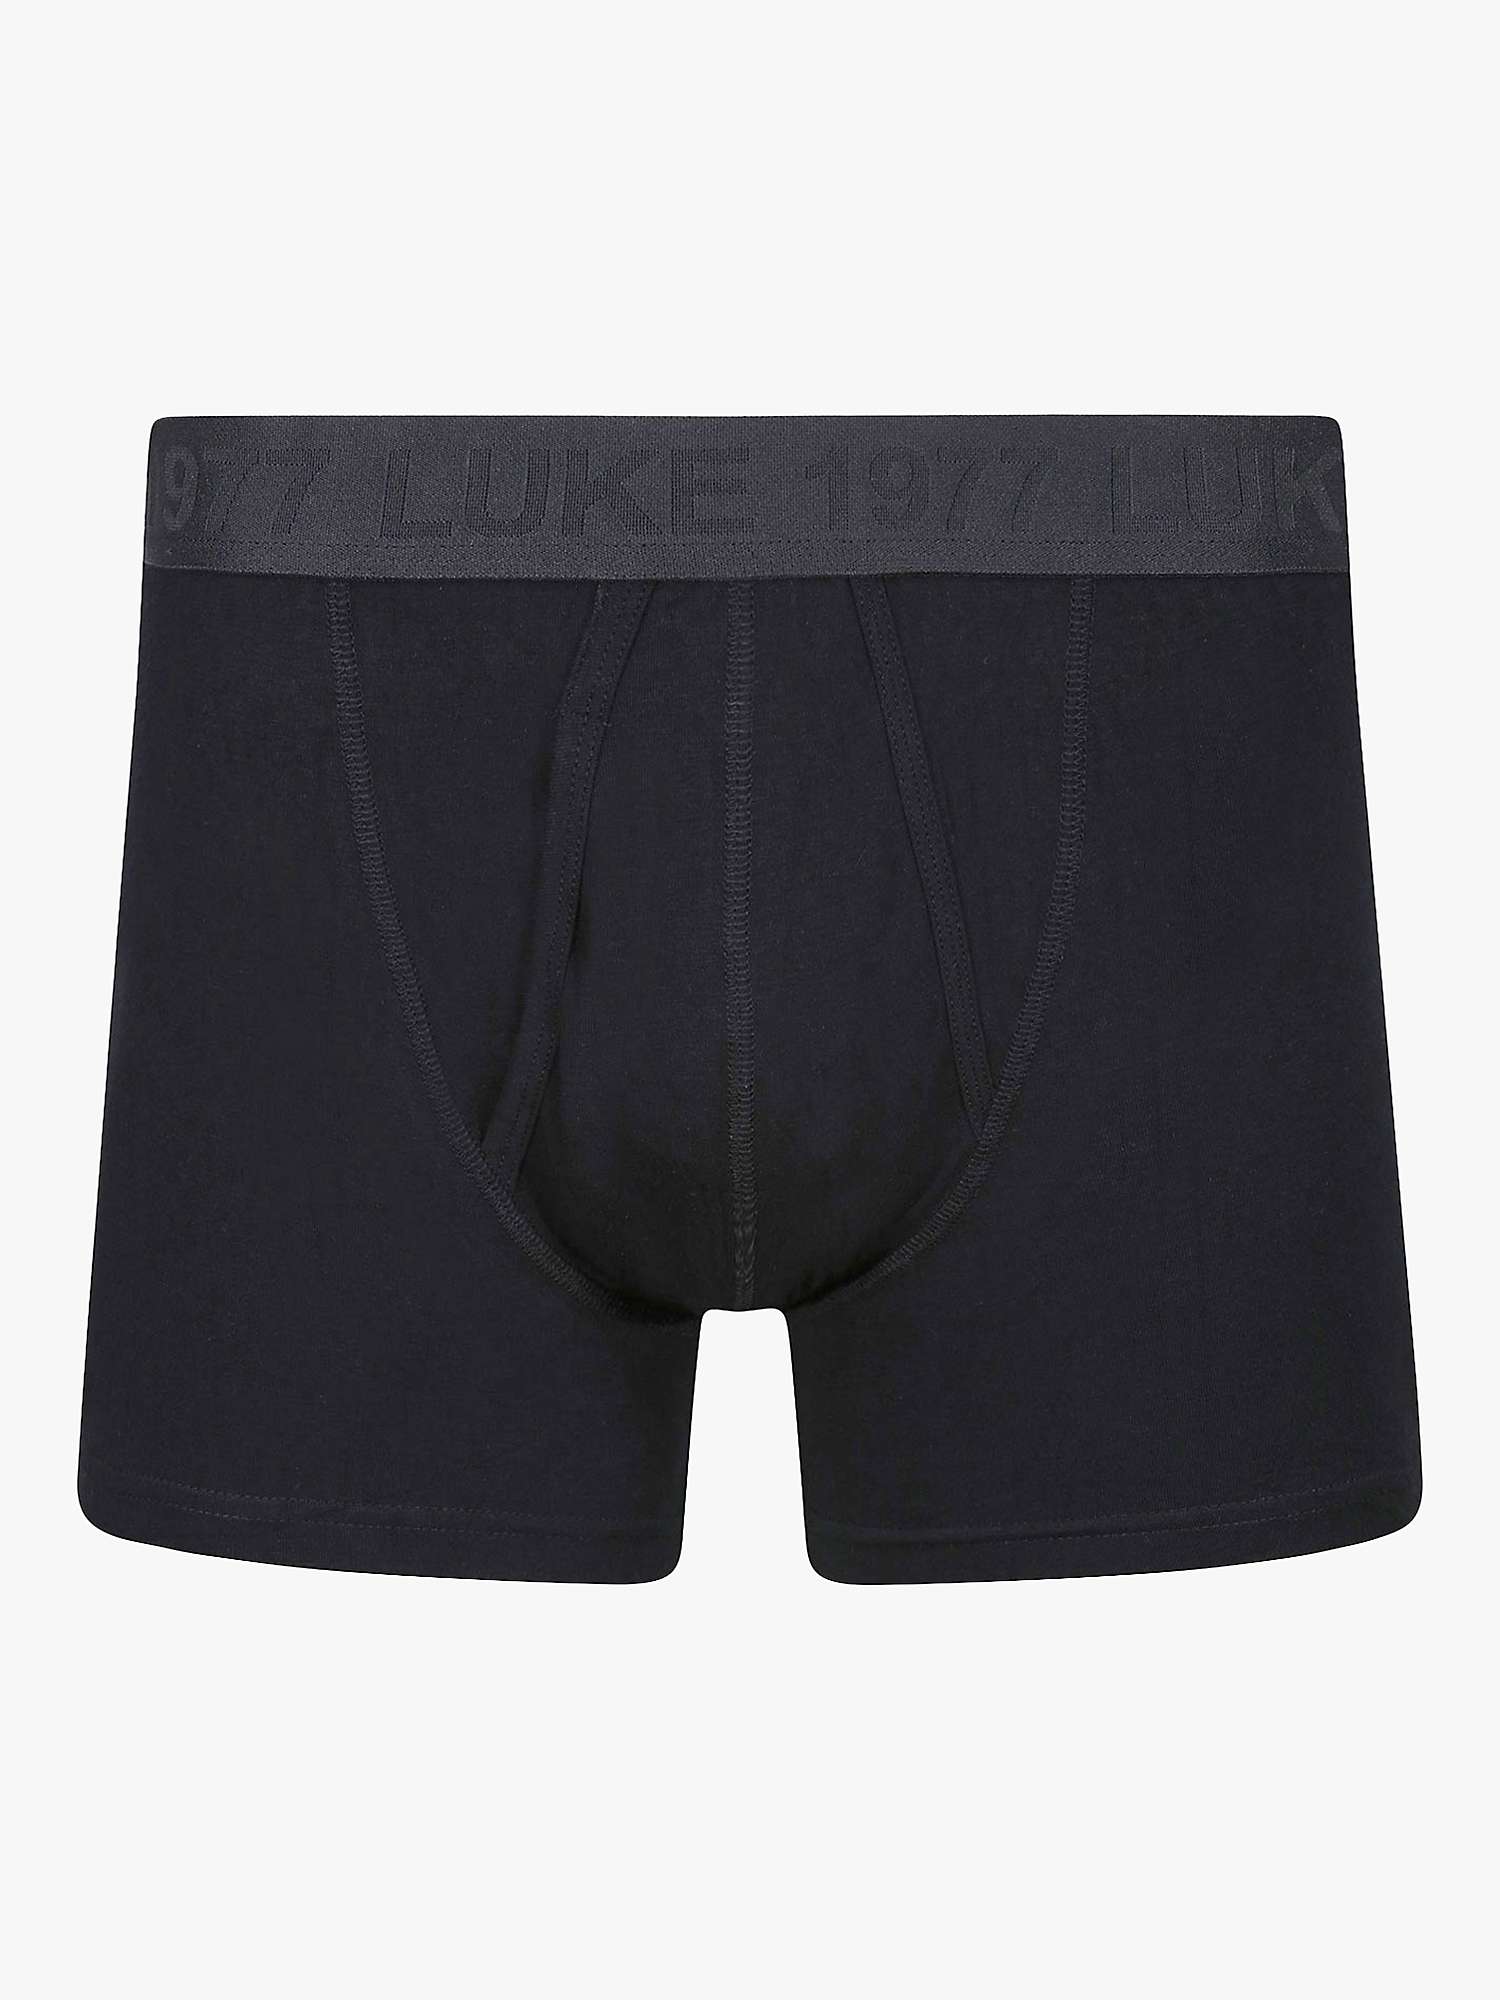 Buy LUKE 1977 Keiran Cotton Blend Boxers, Pack of 3, Black Online at johnlewis.com